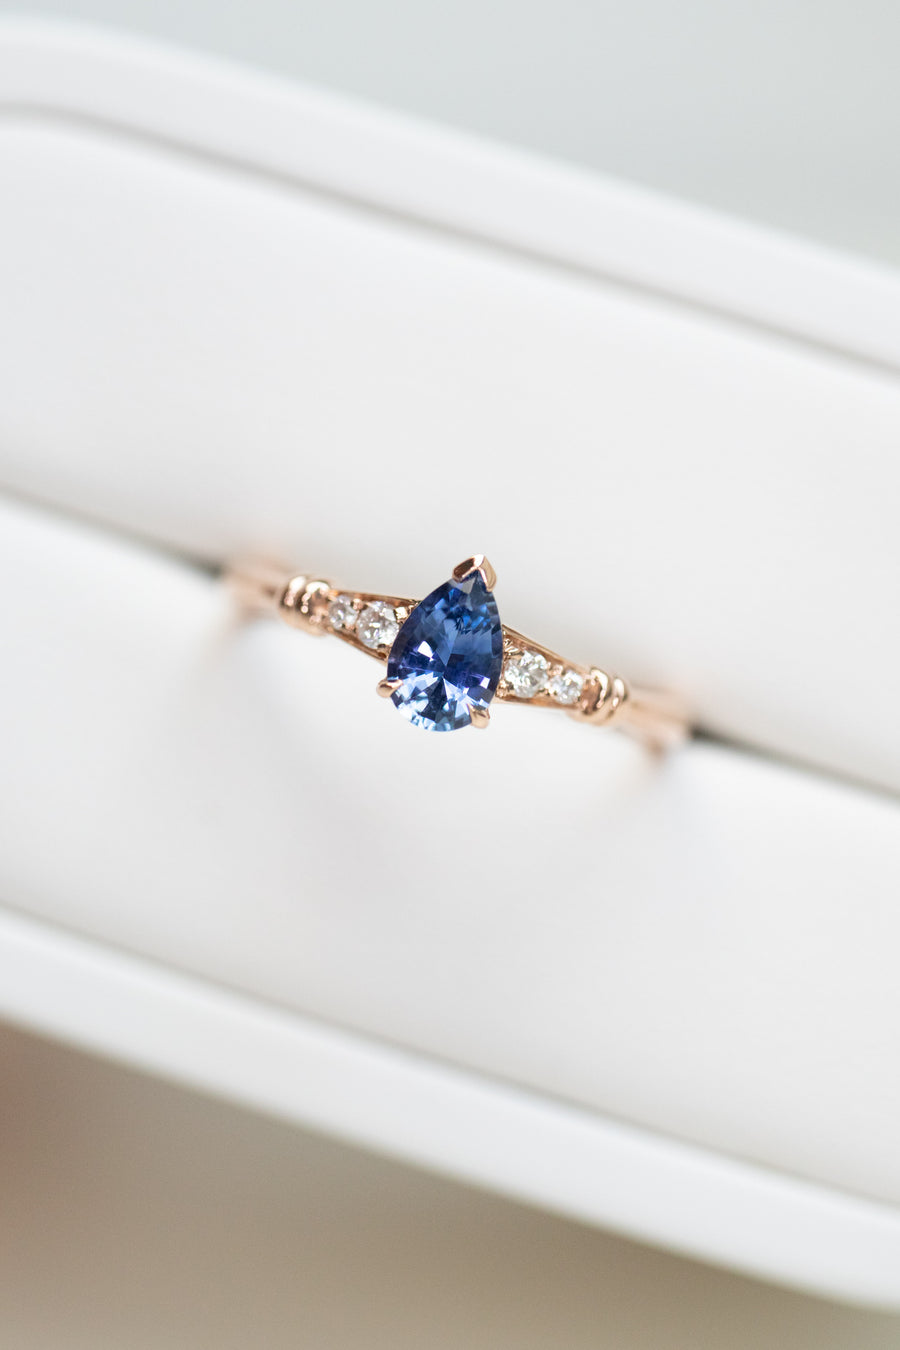 0.45carat Pear Blue Sapphire & total 0.06carat Diamonds 18K Rose/Yellow Gold Ring